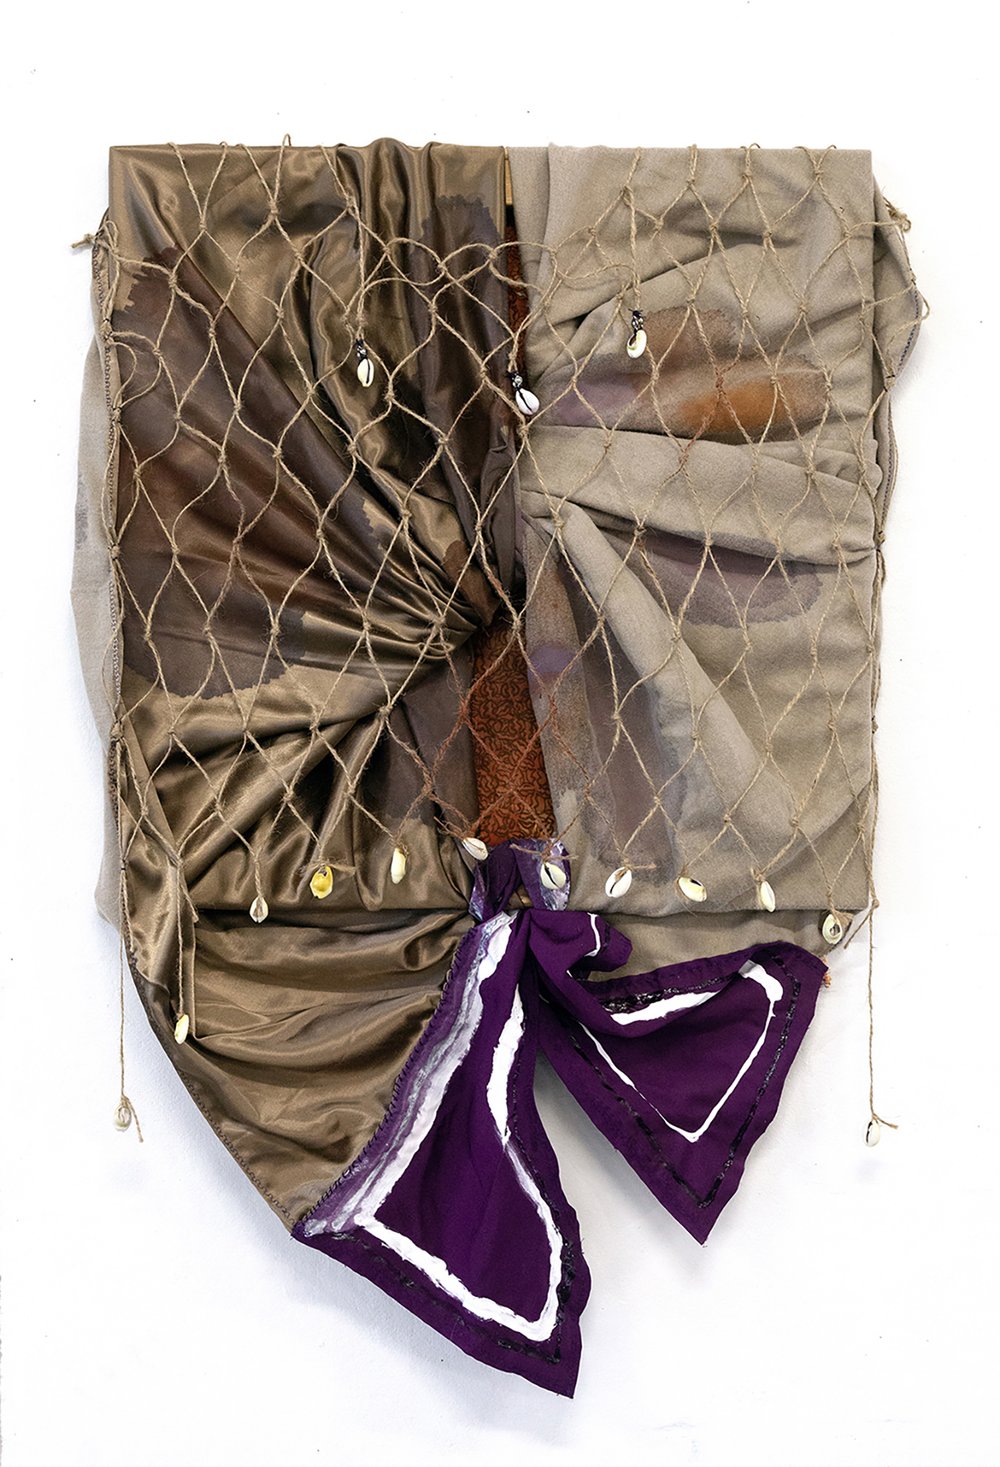  María de Los Angeles Rodríguez Jiménez,  Omolu , 2023, Cotton, acrylic, net, and cowry shells, 24 x 30 inches. 